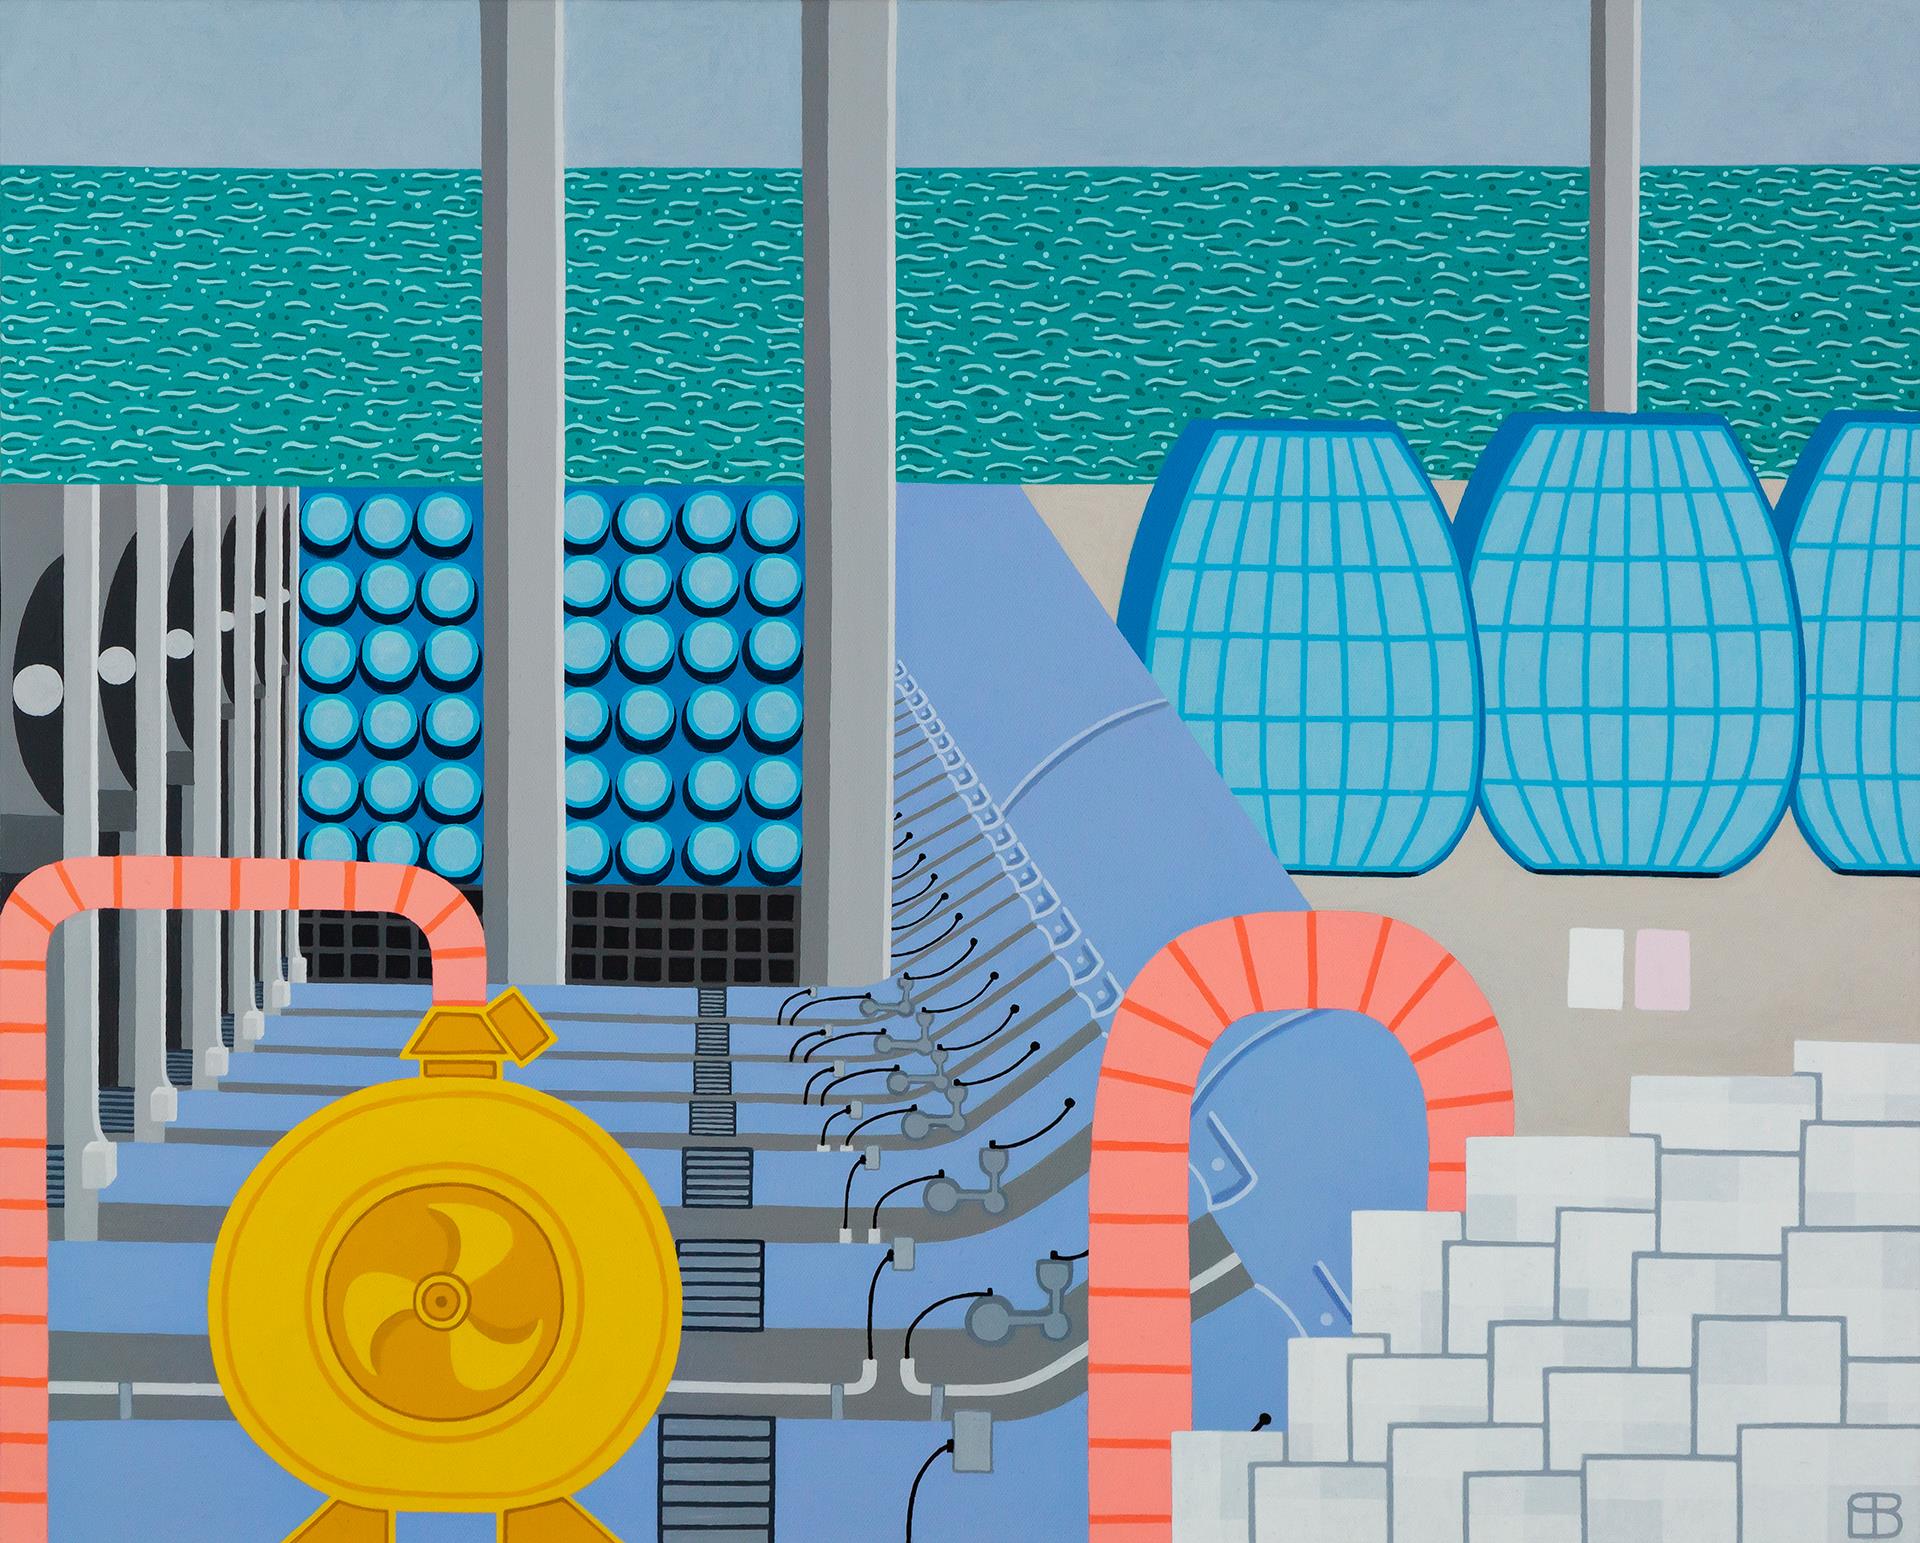 Sonny Lipps, Desalination. Acrylic on canvas, 24” x 30”. $1000.